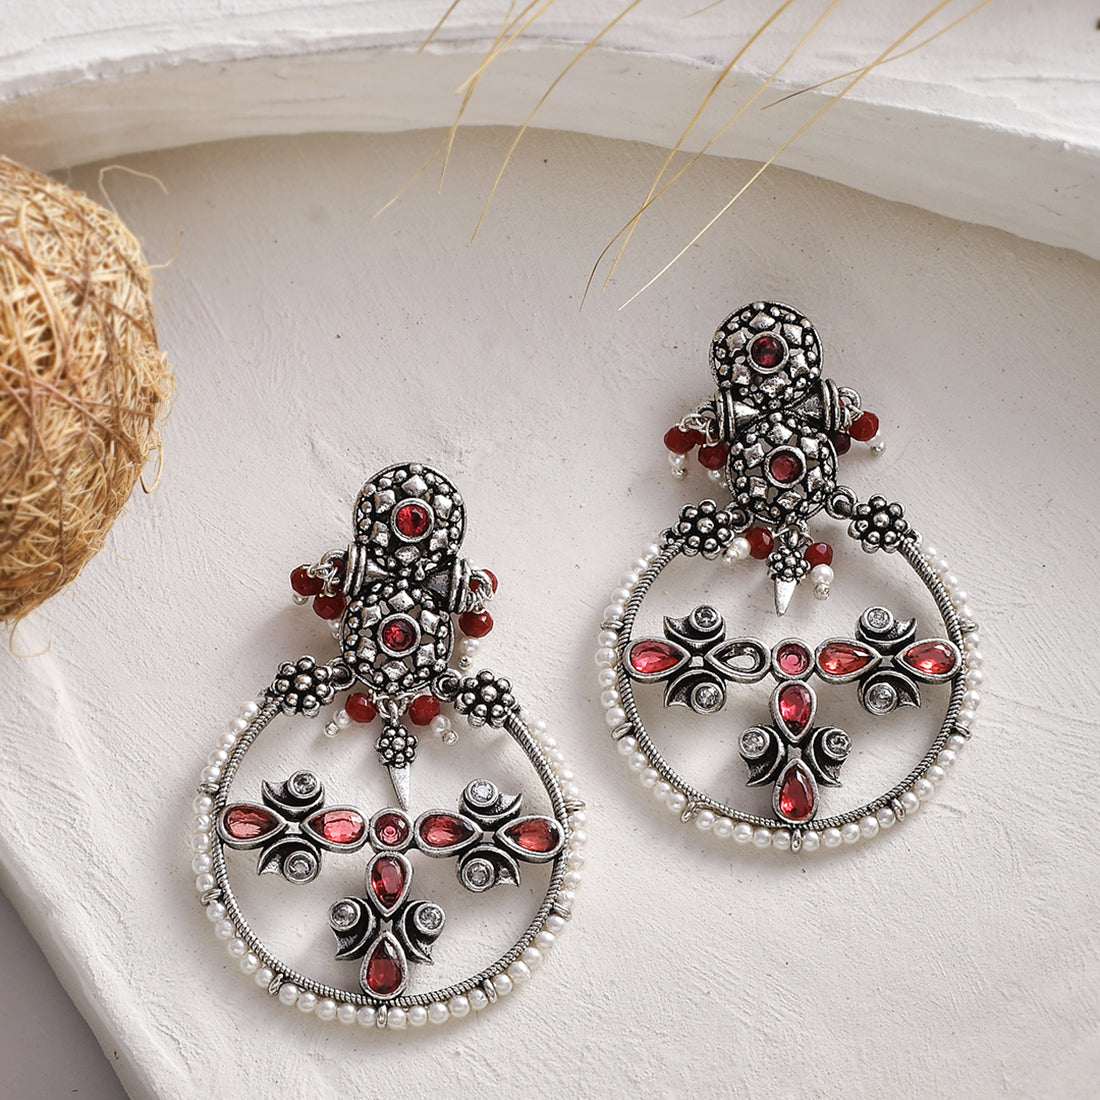 Women's Abharan Floral Motif Teardrop Cut Red Stones And Pearls Drop Earrings - Voylla